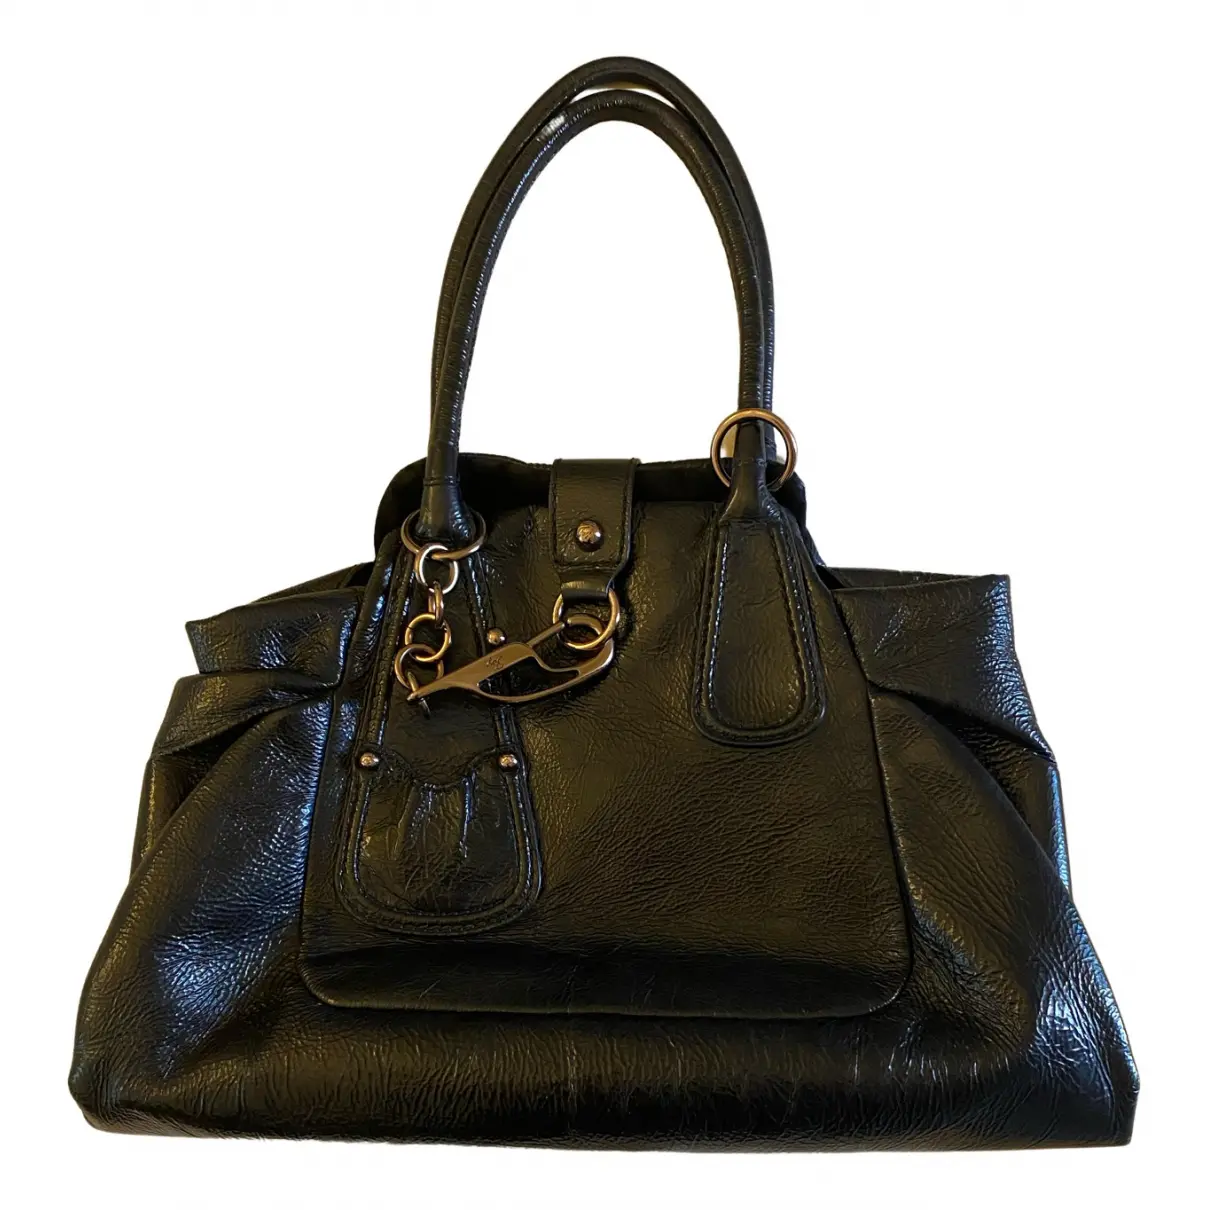 Patent leather handbag Fay